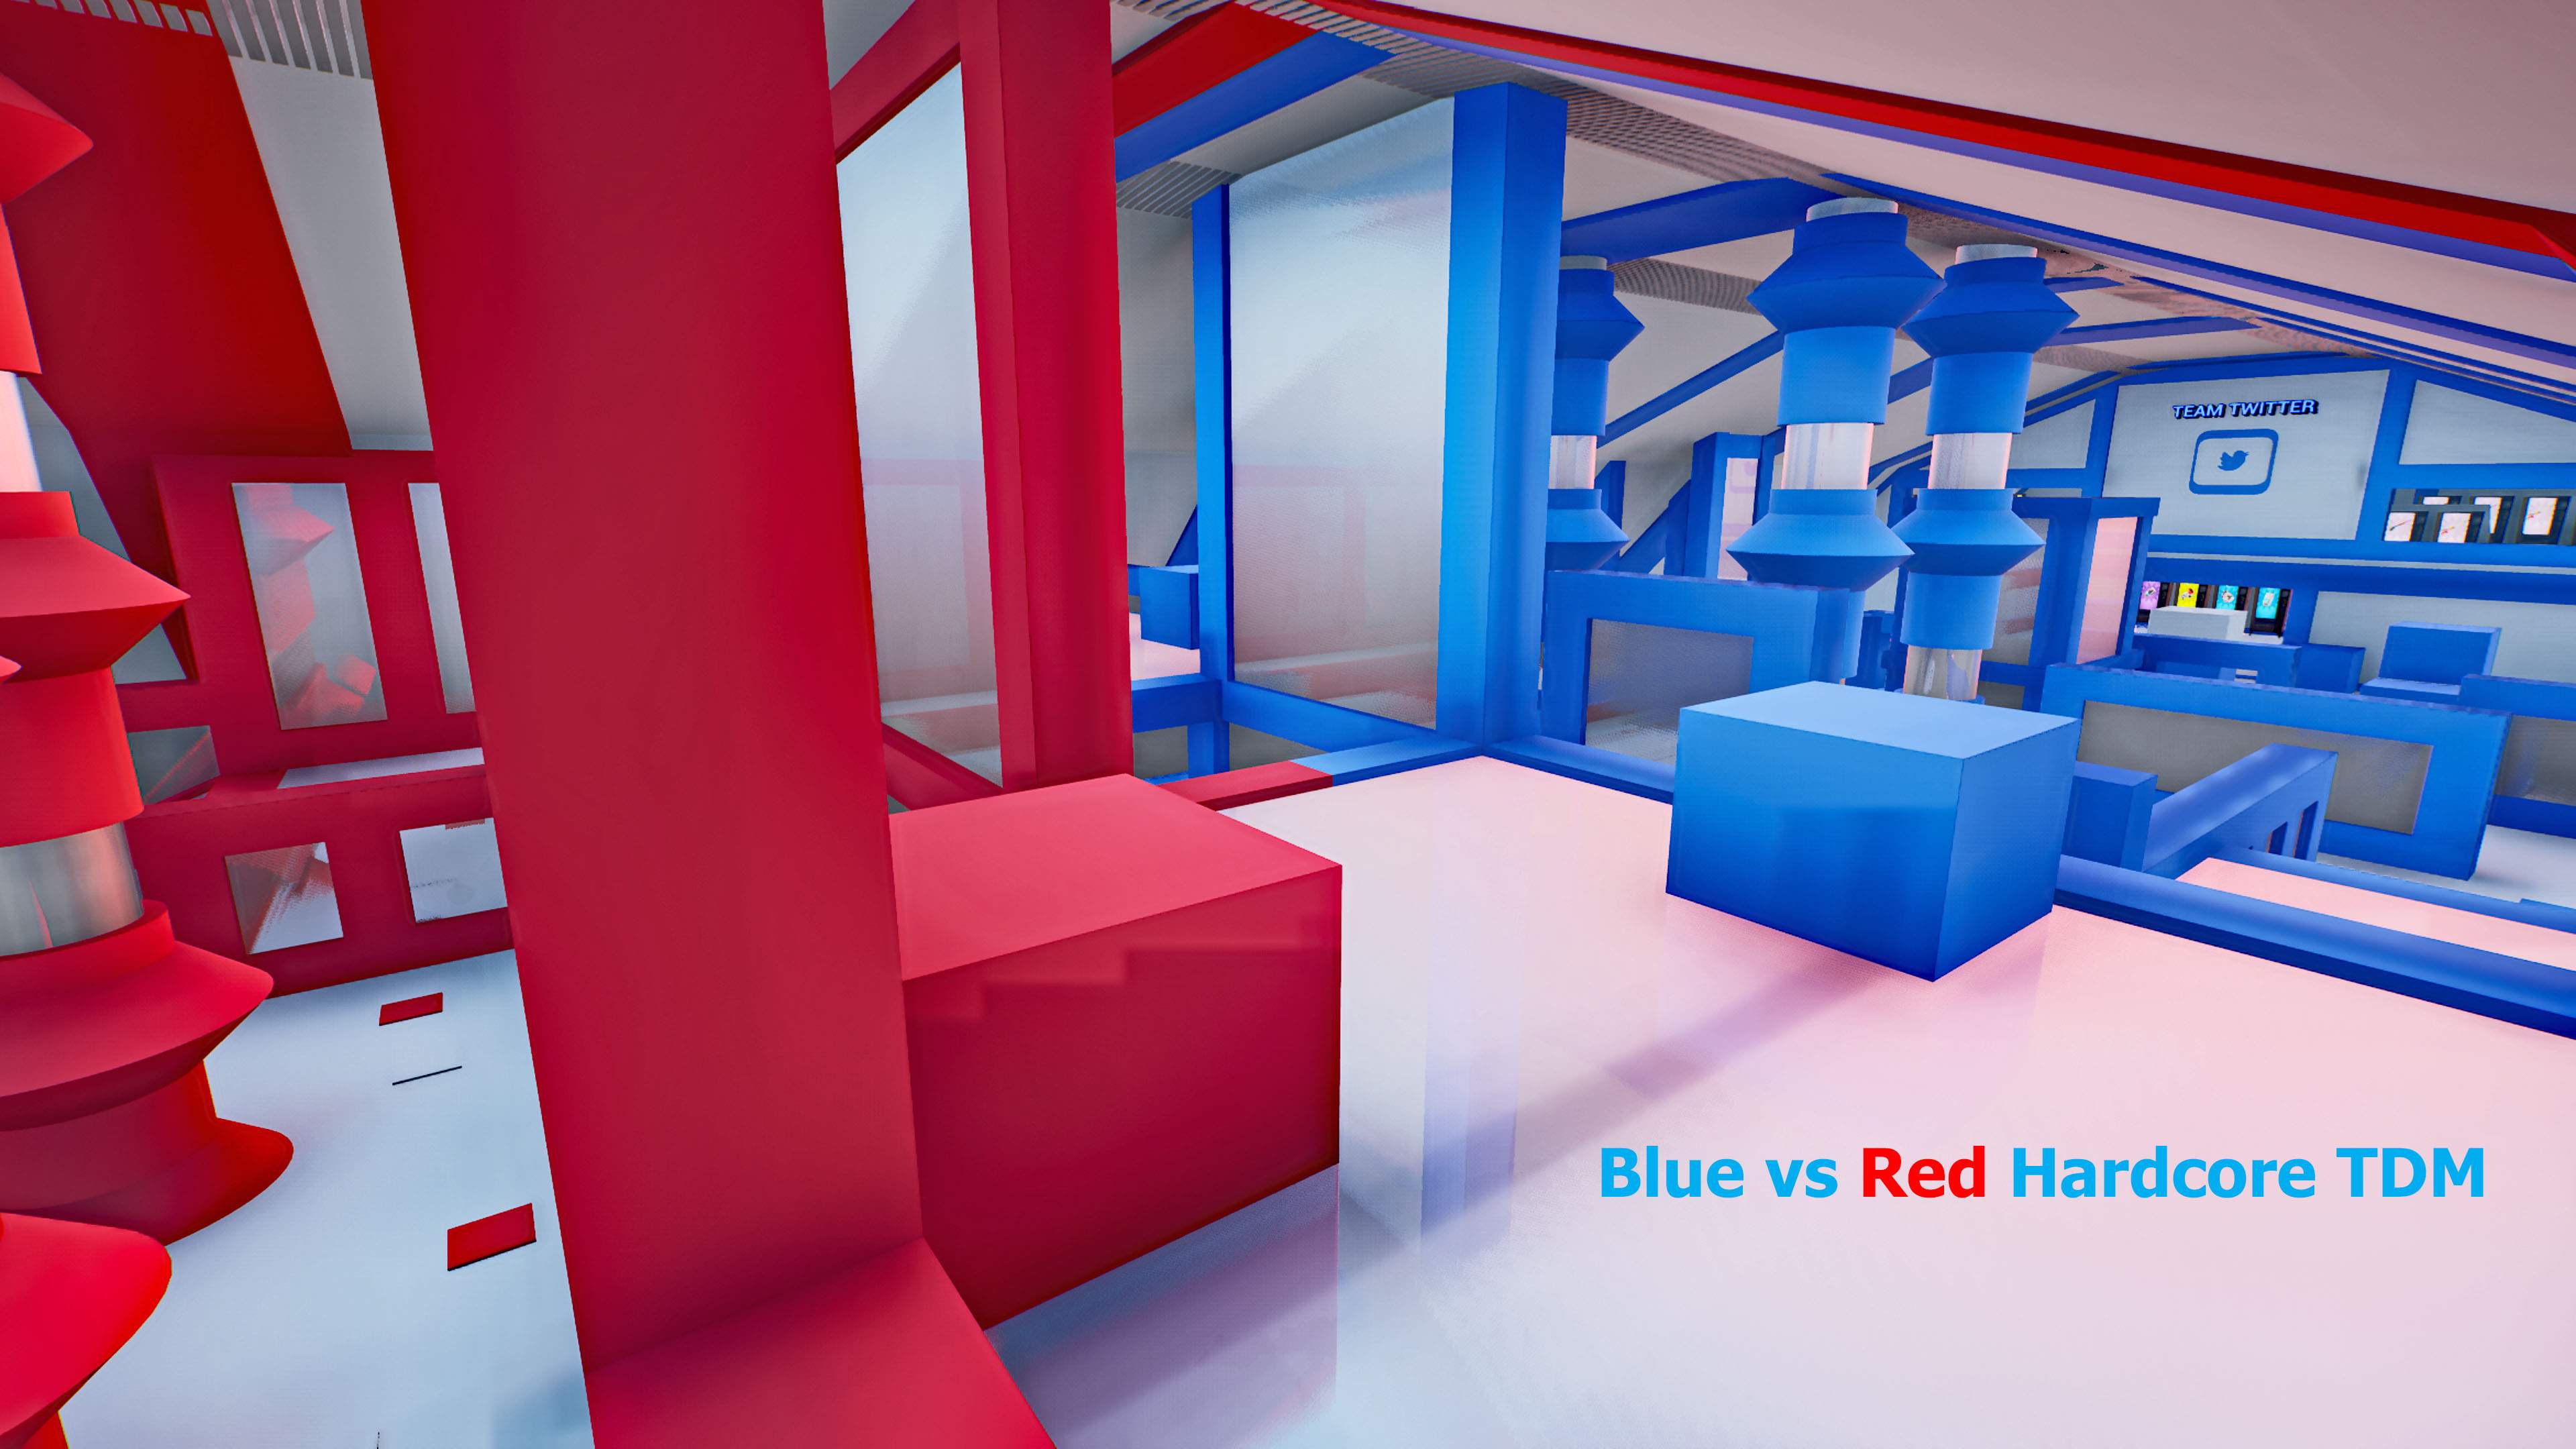 BLUE 🔵 VS 🔴 RED HARDCORE TDM